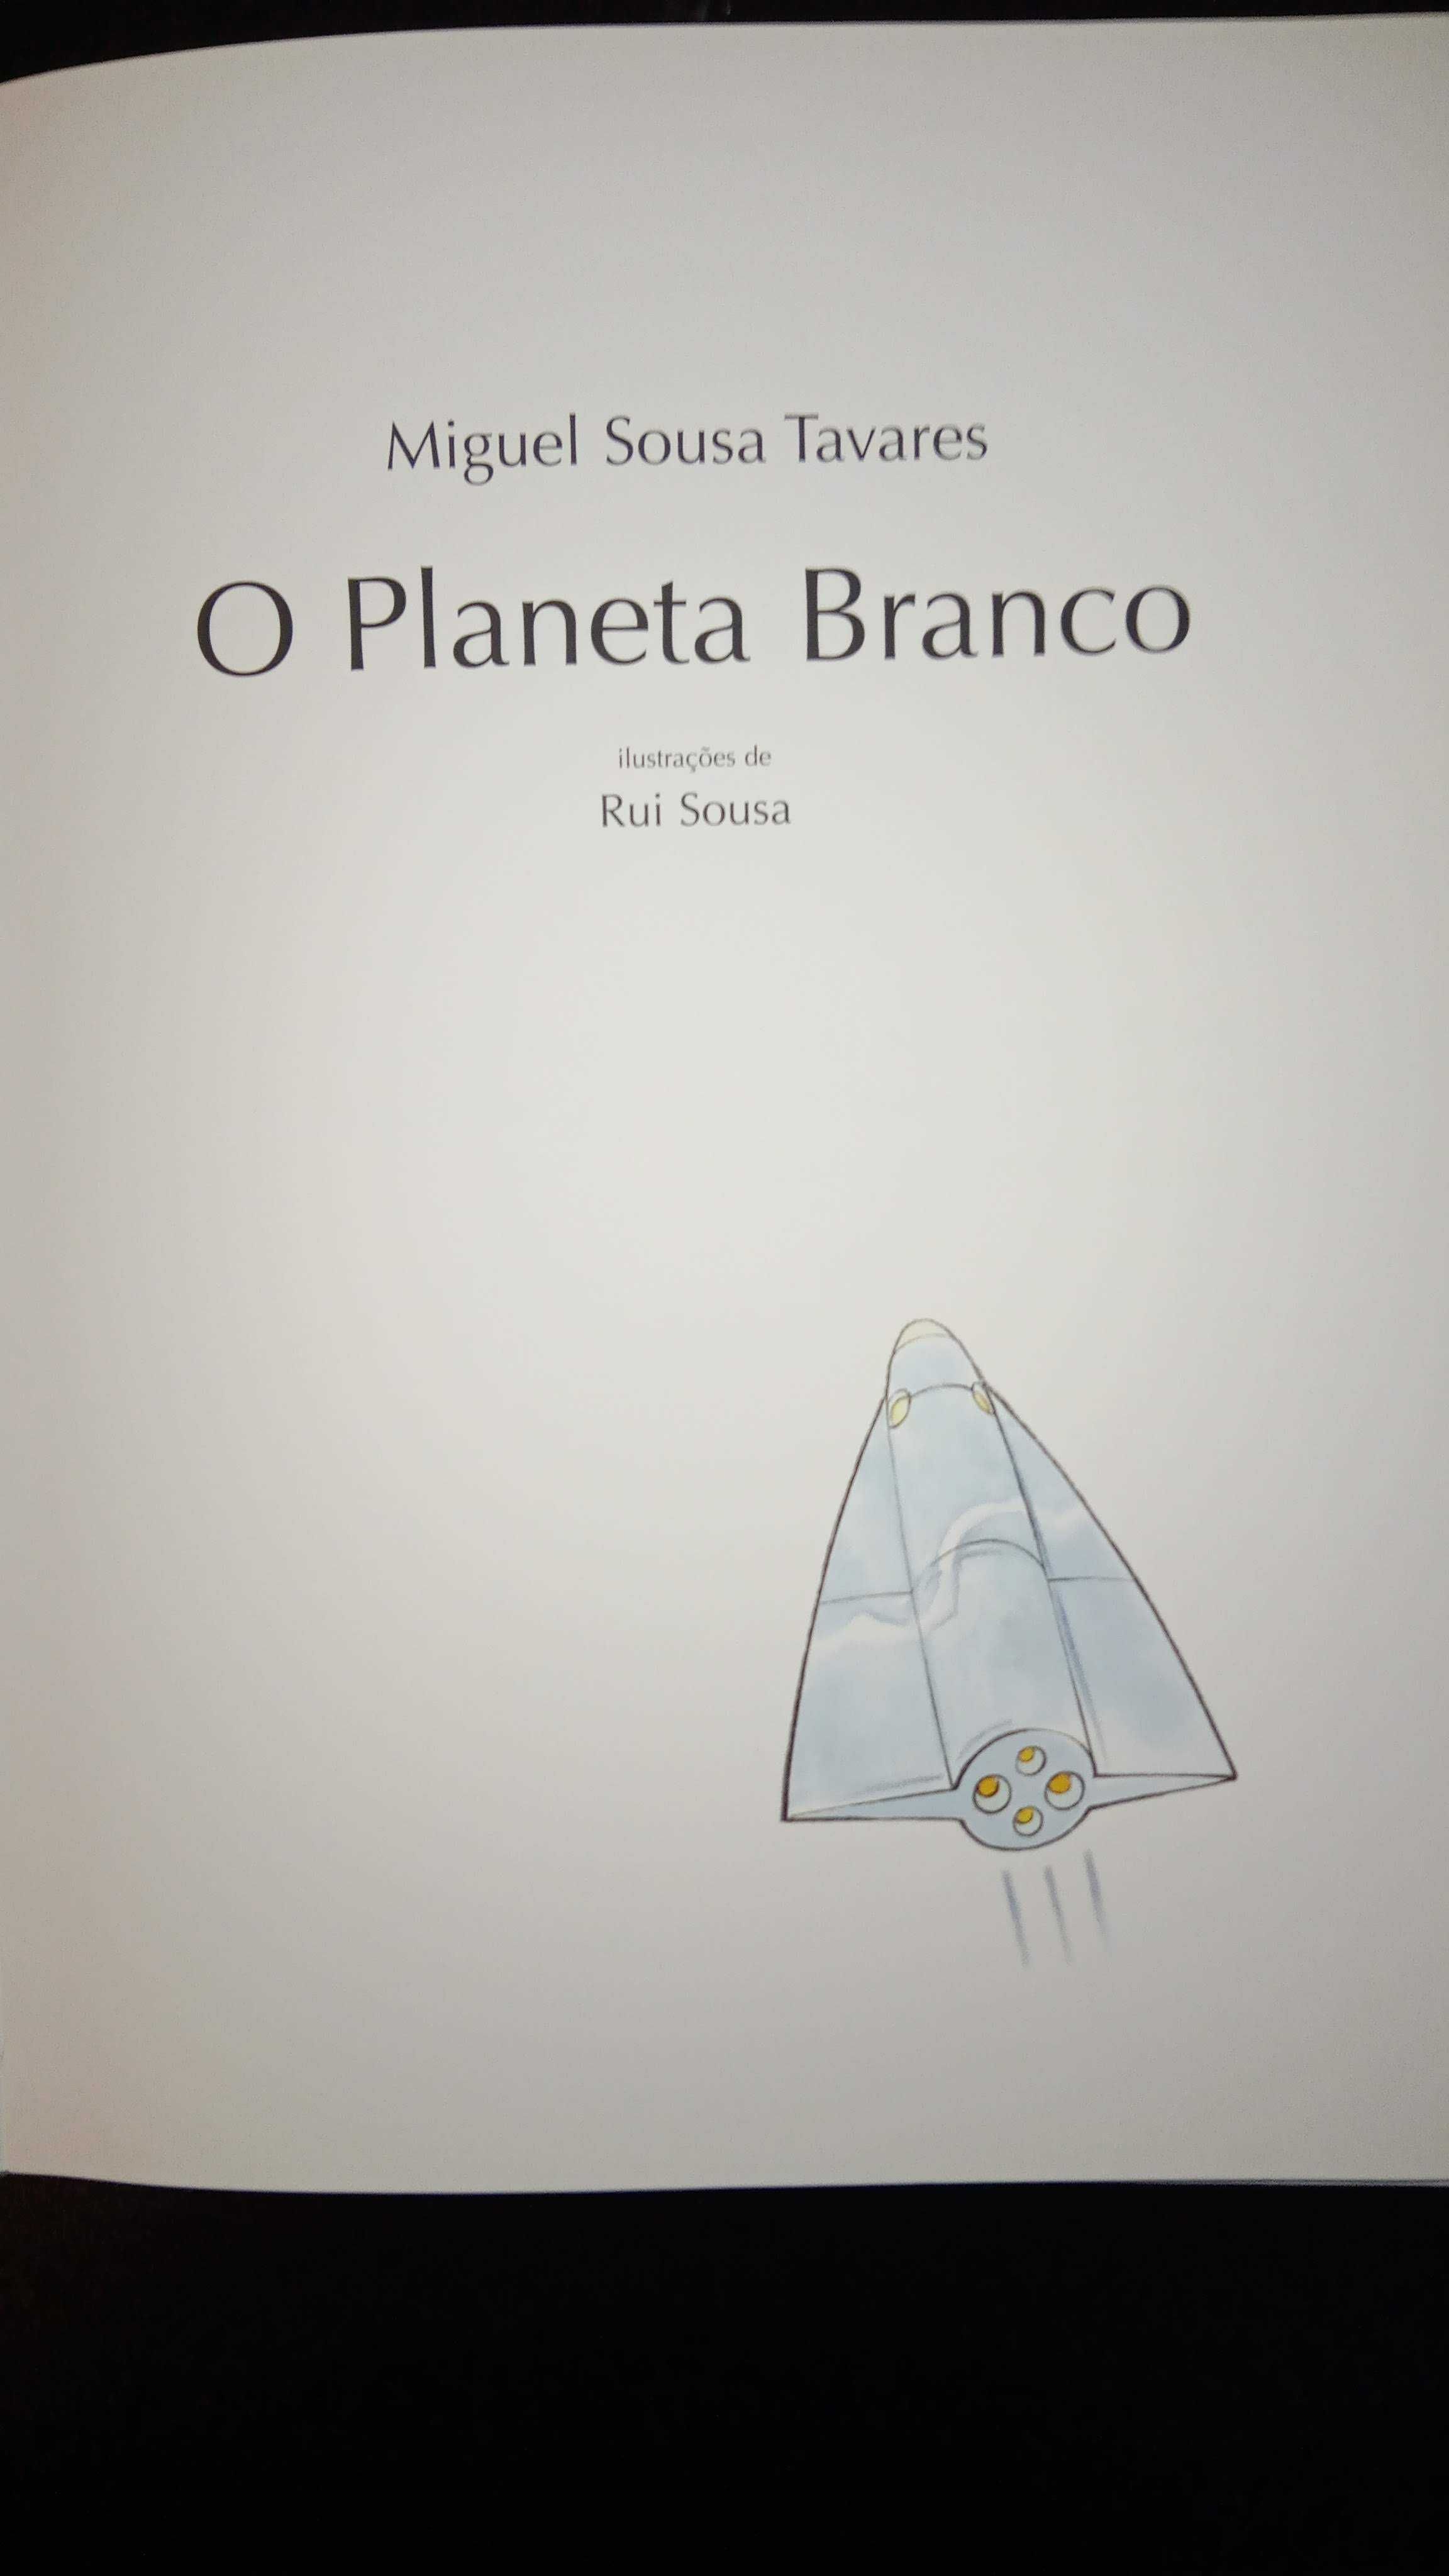 O planeta branco, de Miguel Sousa Tavares